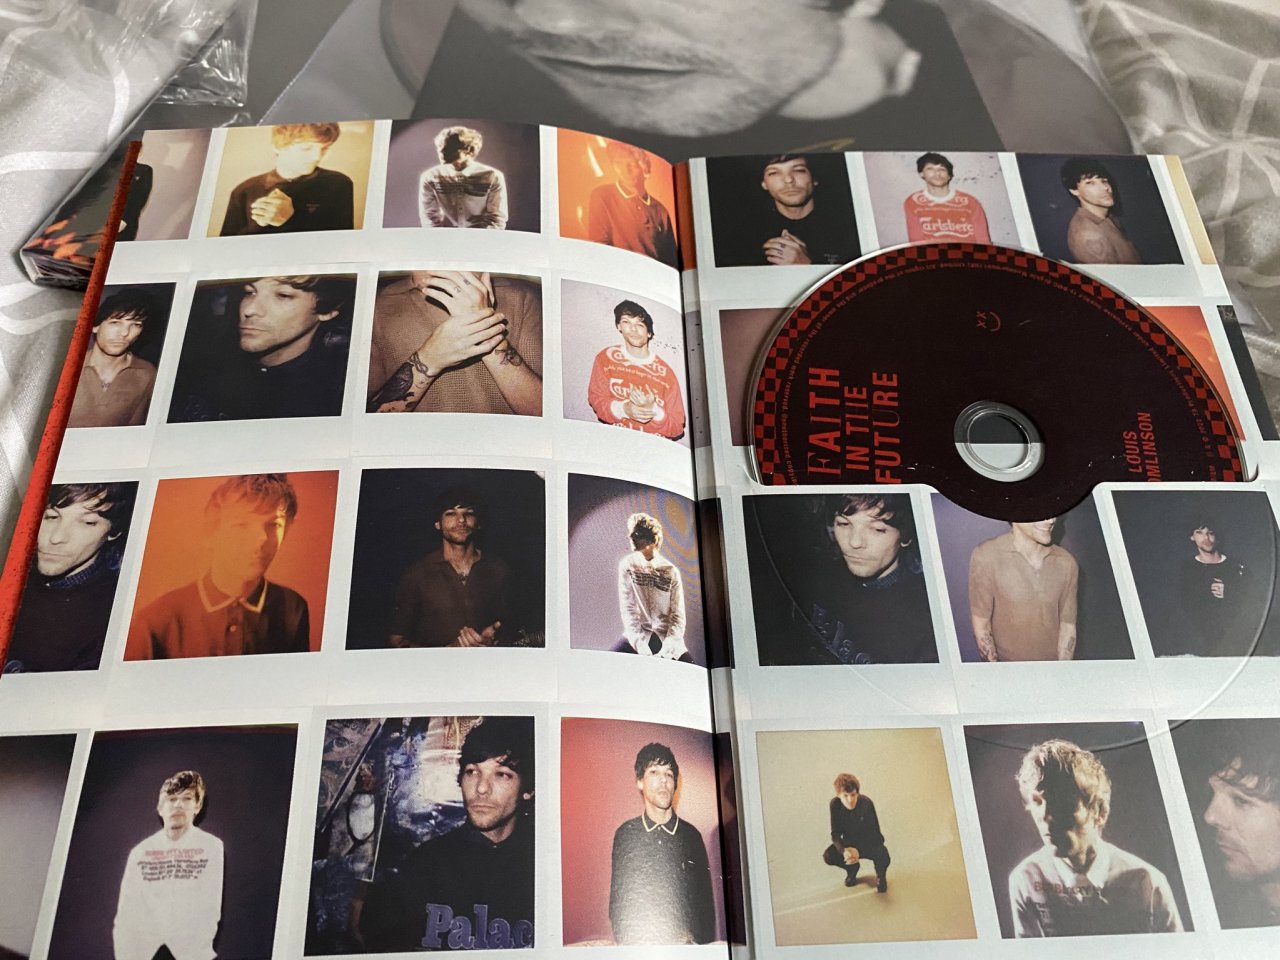 Louis Tomlinson Perfect Now Vinyl Record Song Lyric Music Art